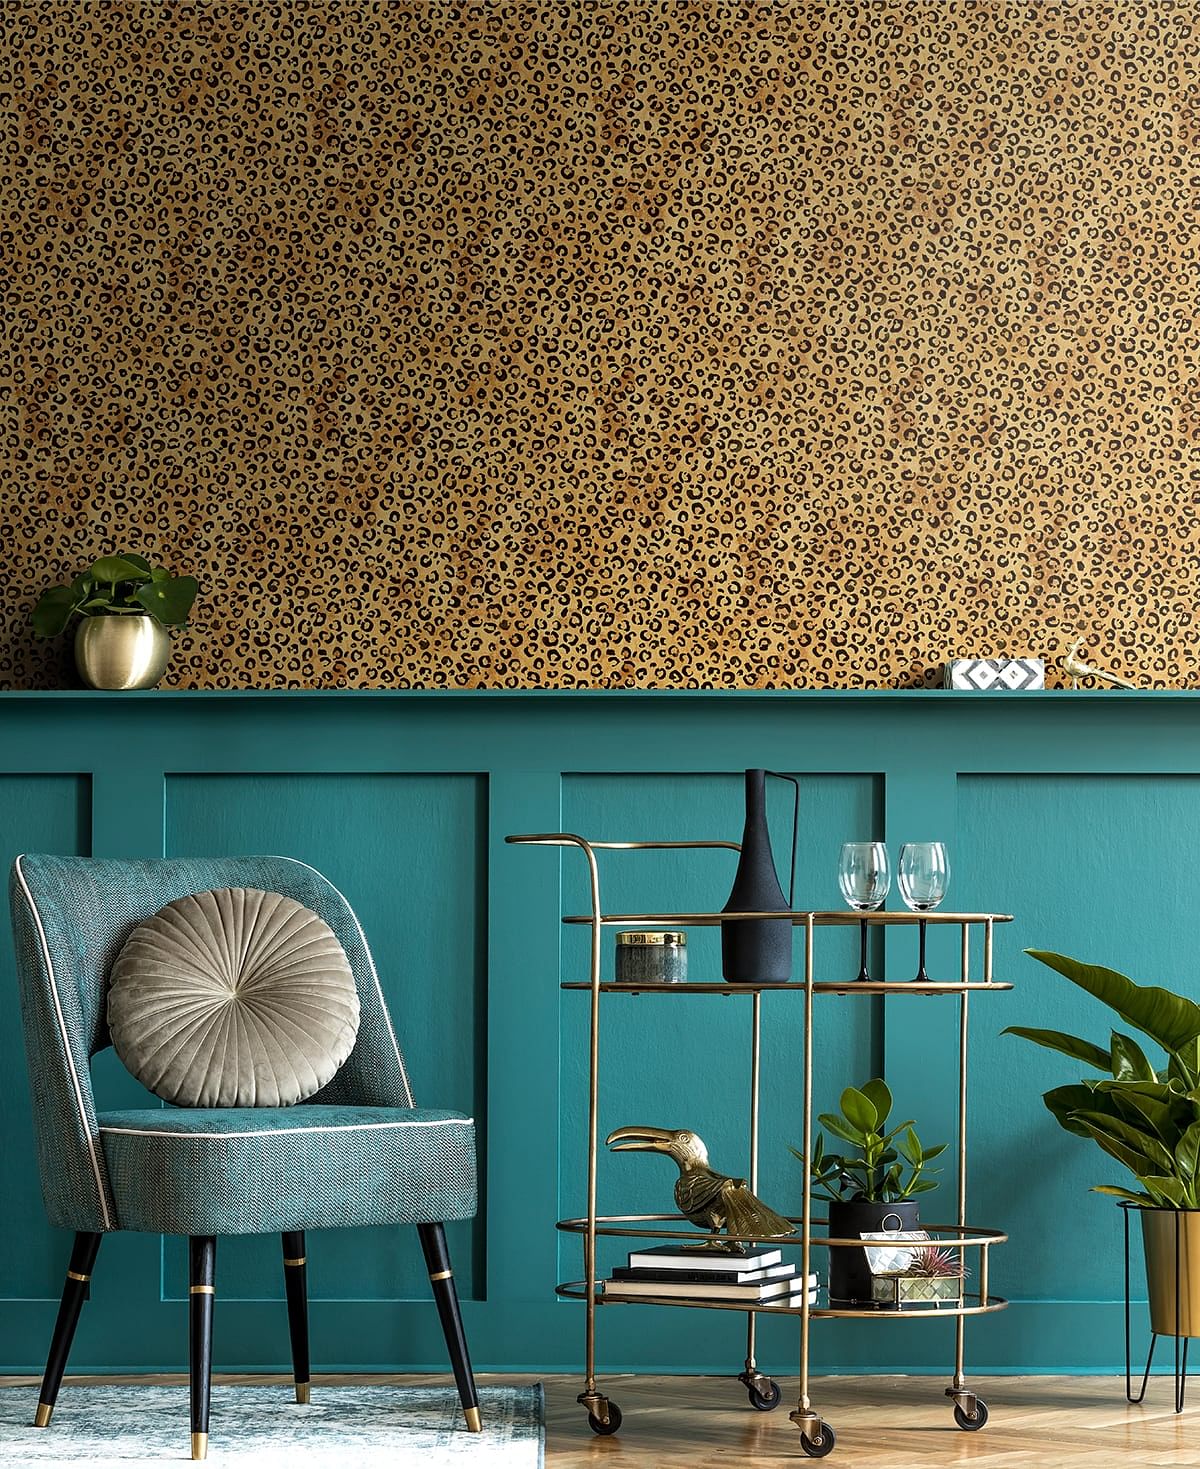 leopard wallpaper for room